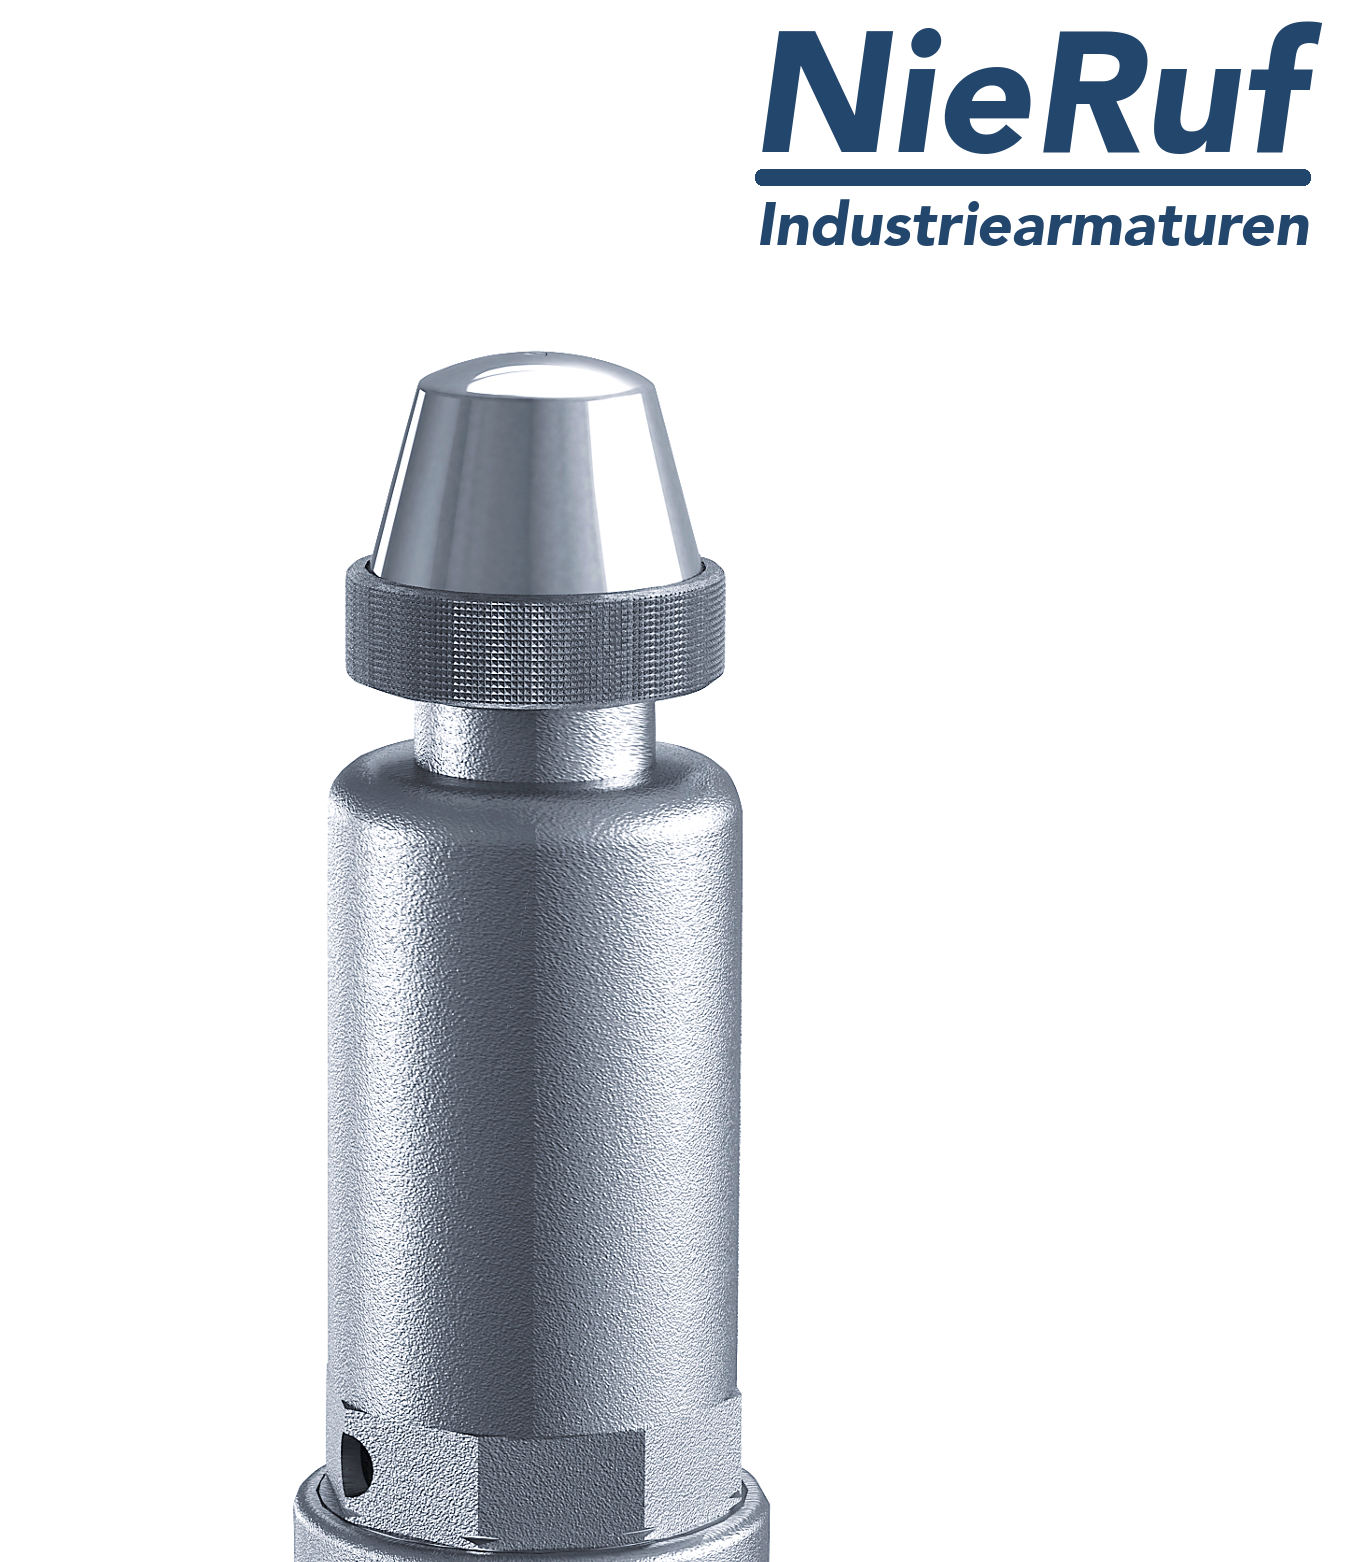 valvola di sicurezza 1 1/2" x 2" F SV09 fluidi gassosi neutri, acciaio inox NBR